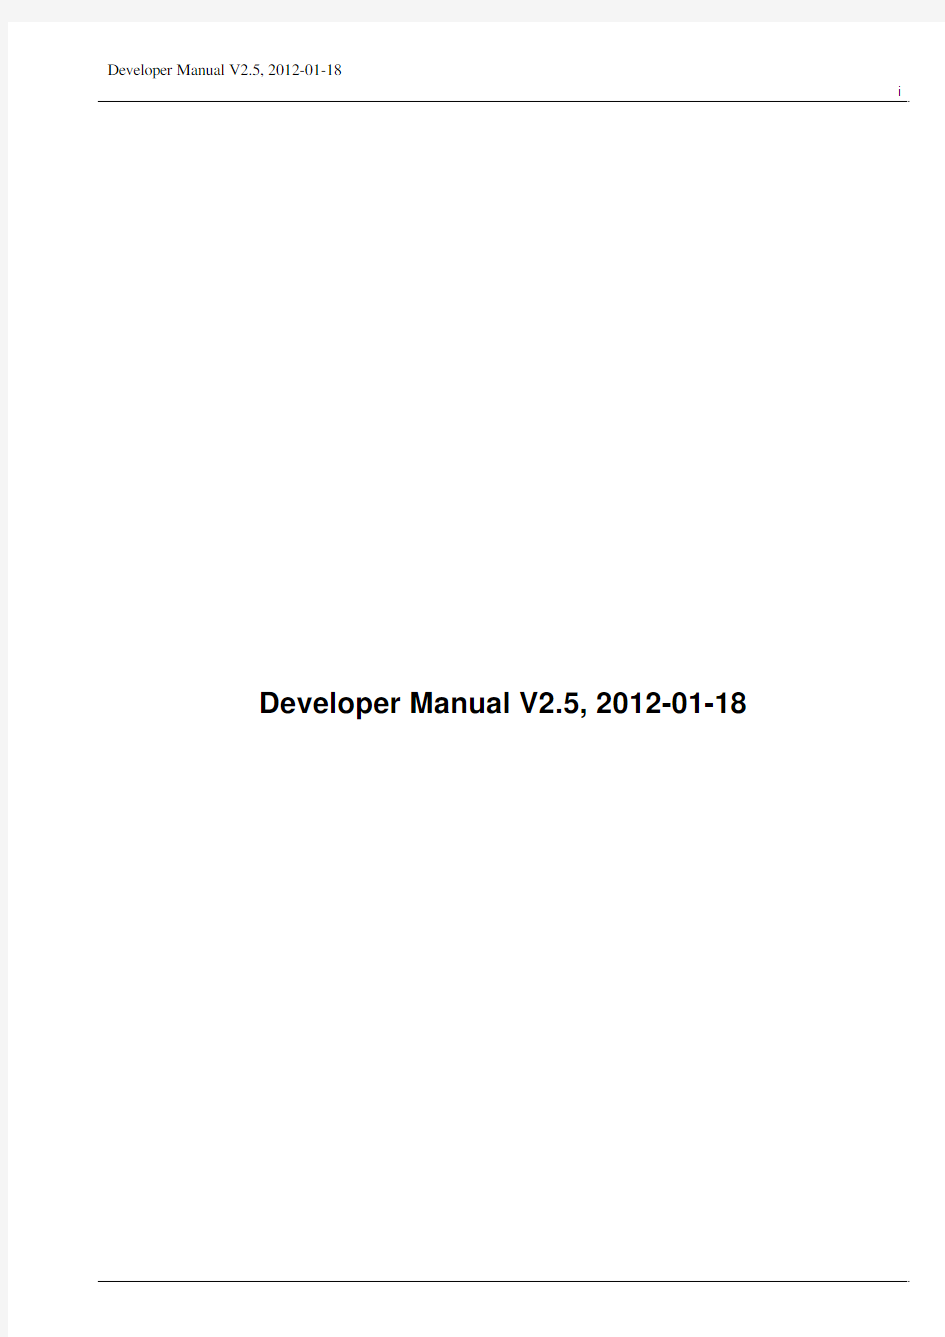 EMC2_Developer_Manual